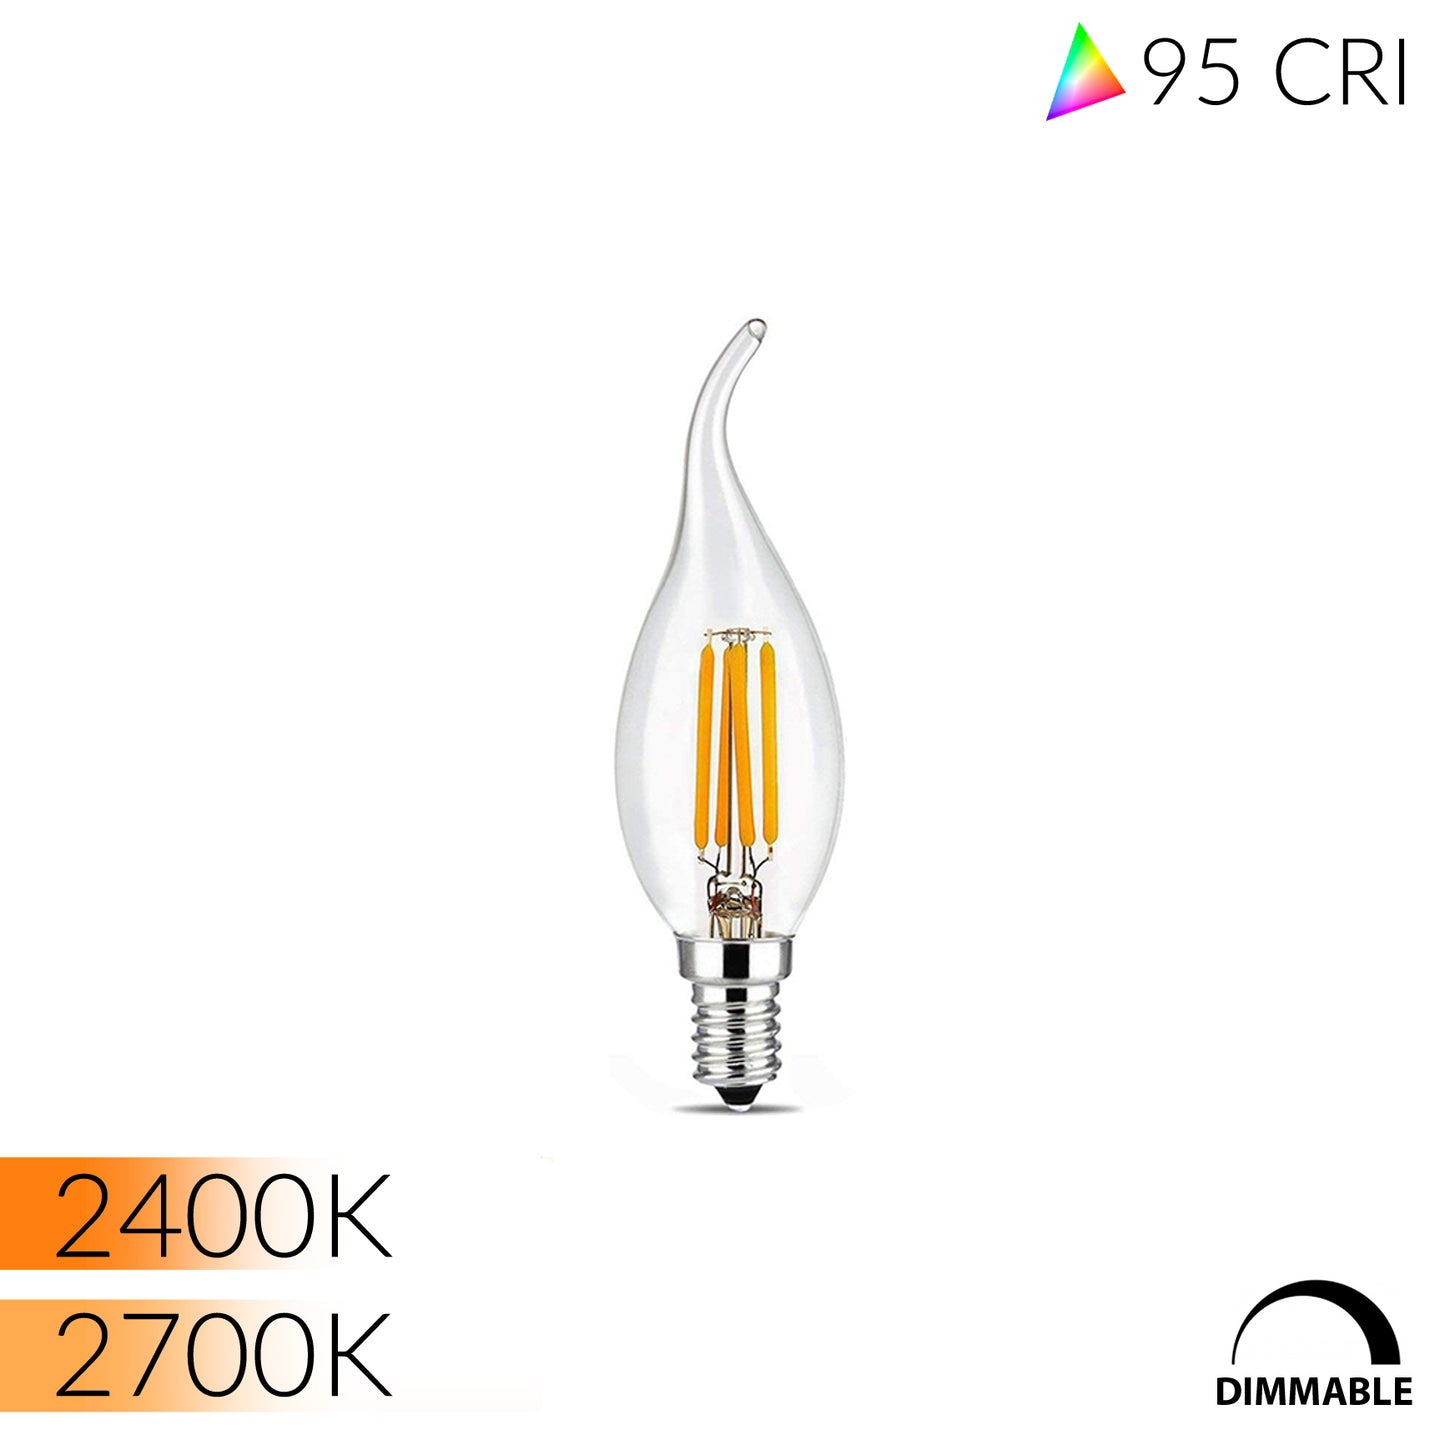 Ultra High 95 CRI Candelabra LED Filament Bulb for Home & Residential